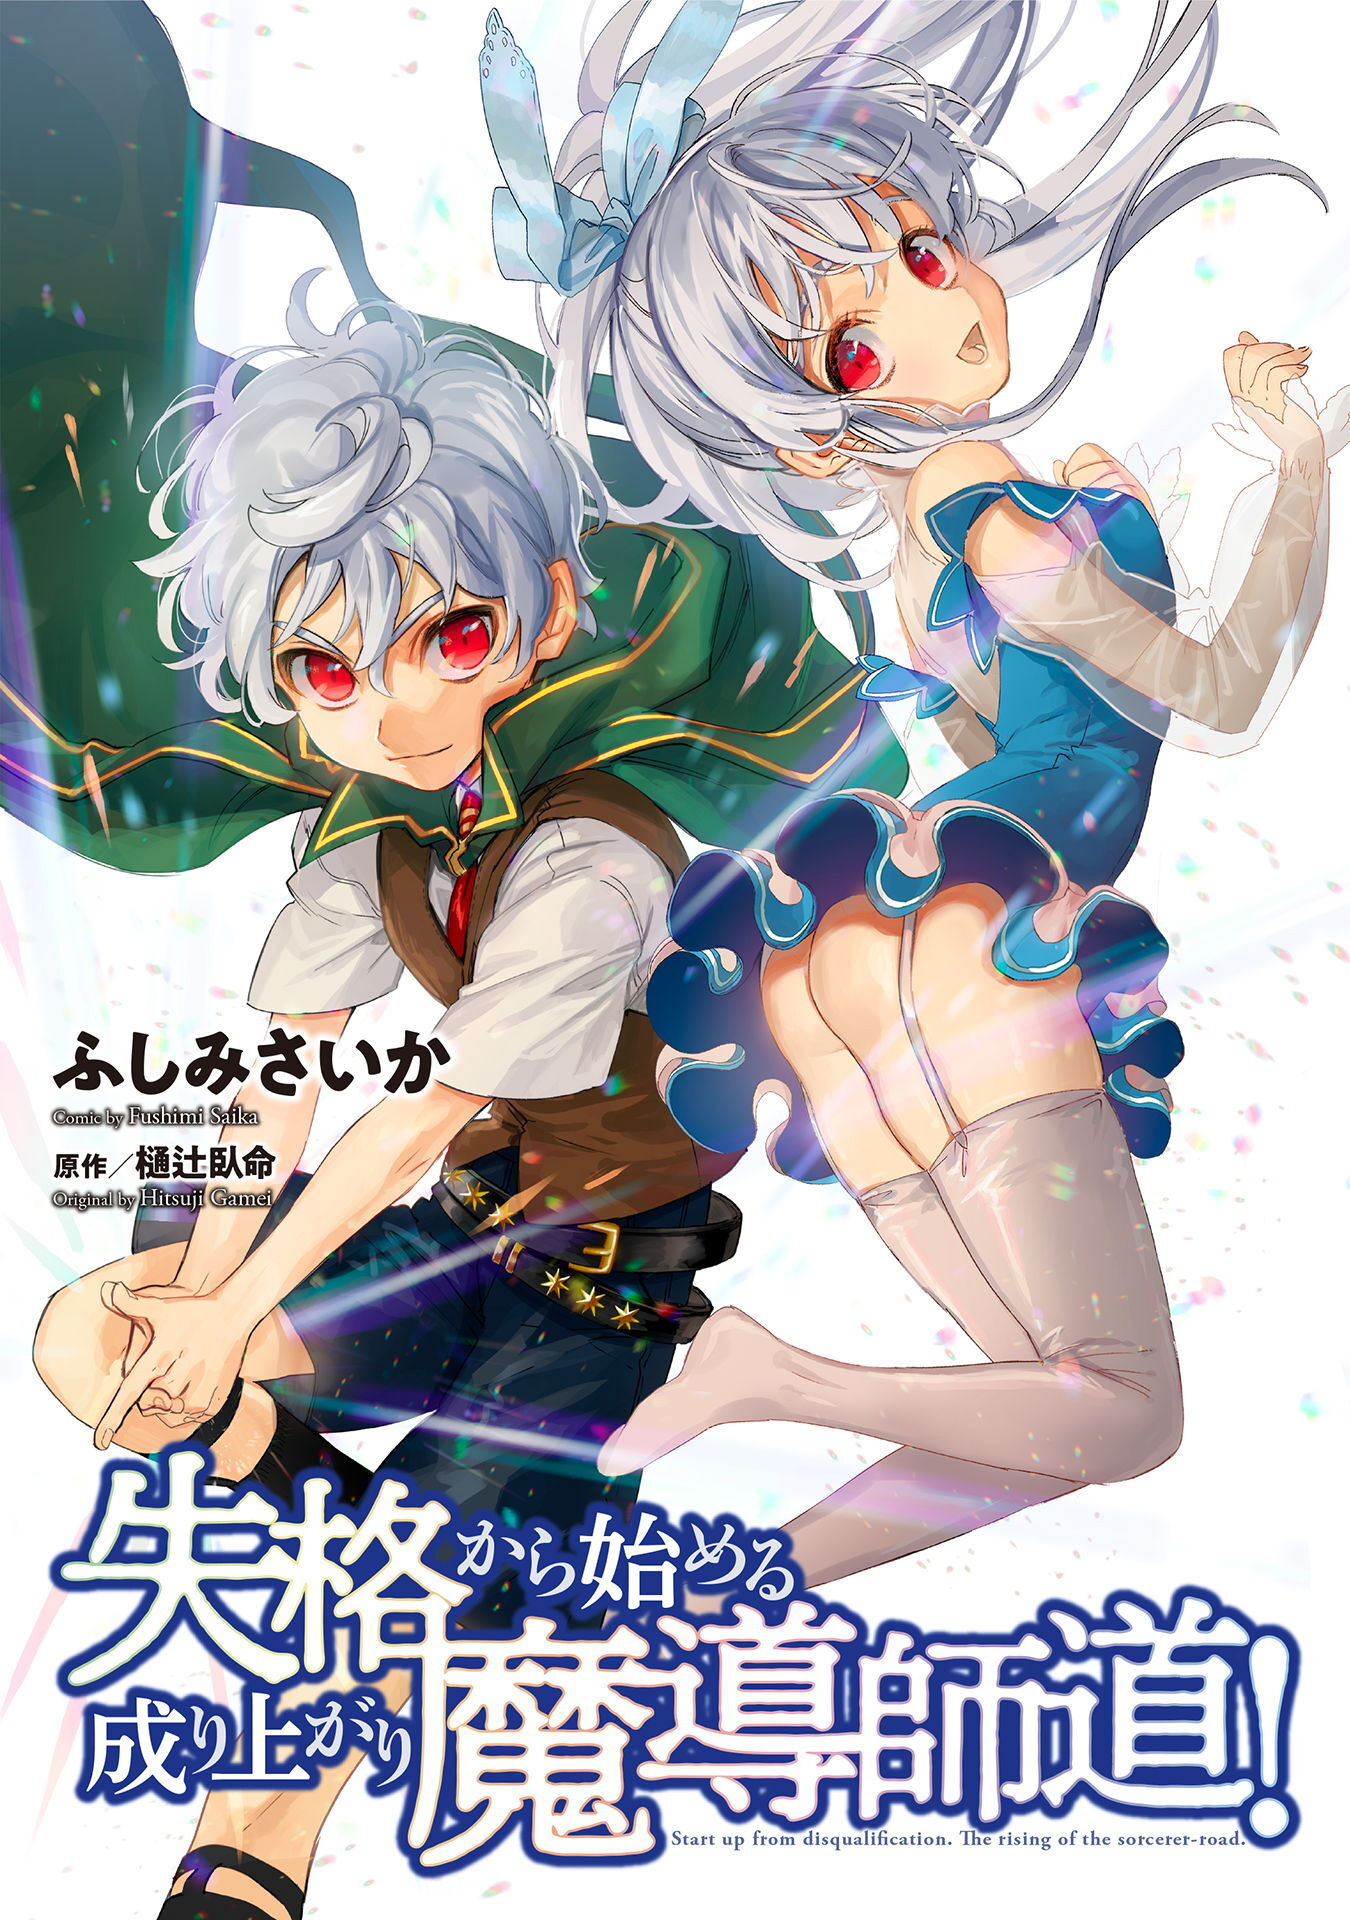 Read Saihate No Paladin - manga Online in English